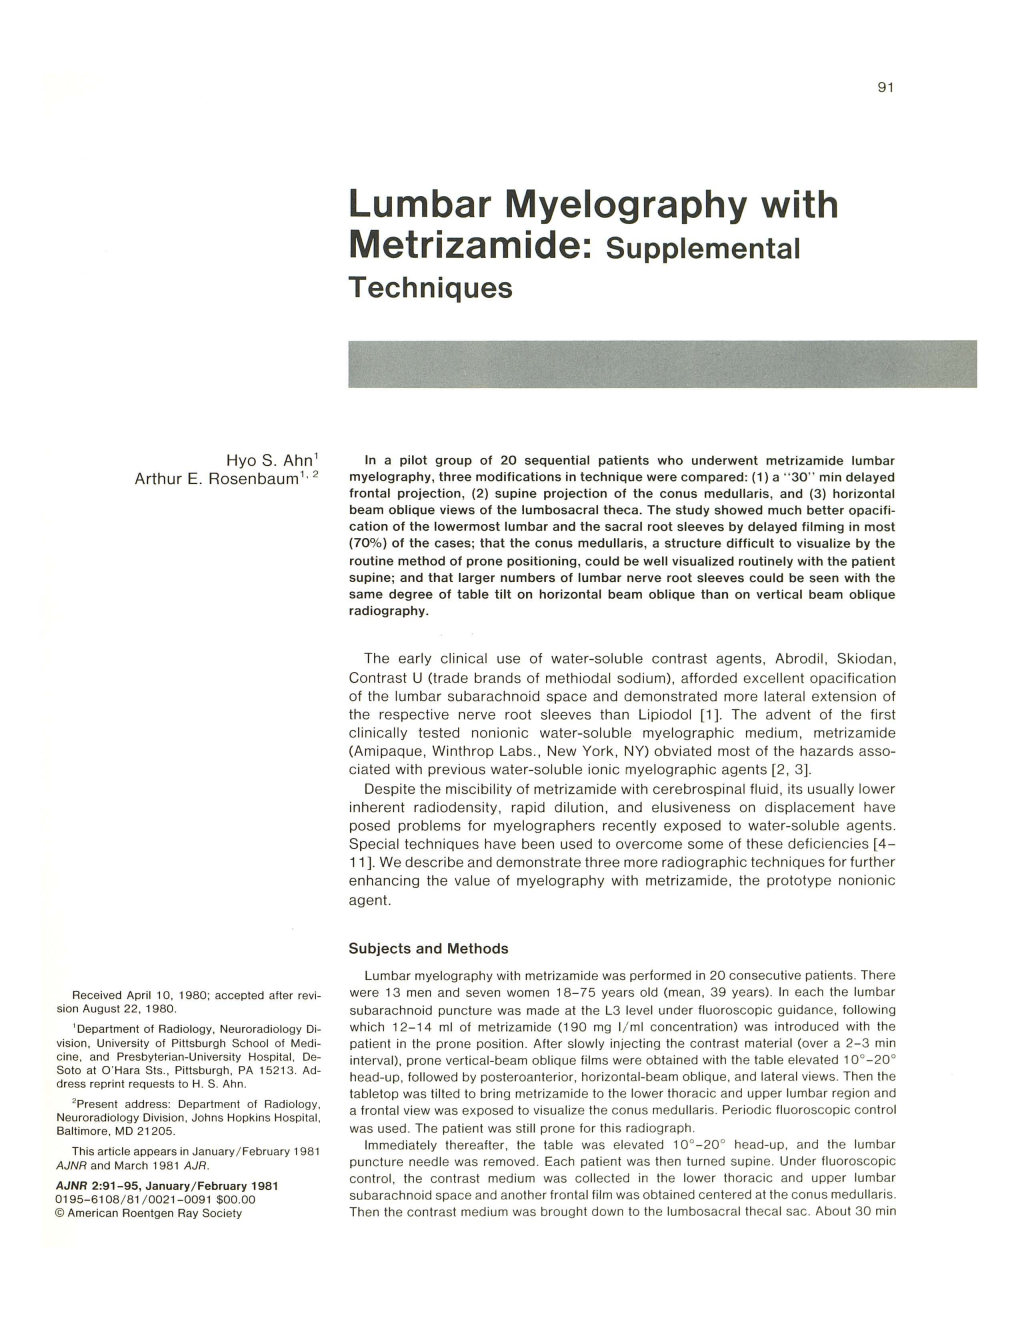 Lumbar Myelography with Metrizamide: Supplemental Techniques